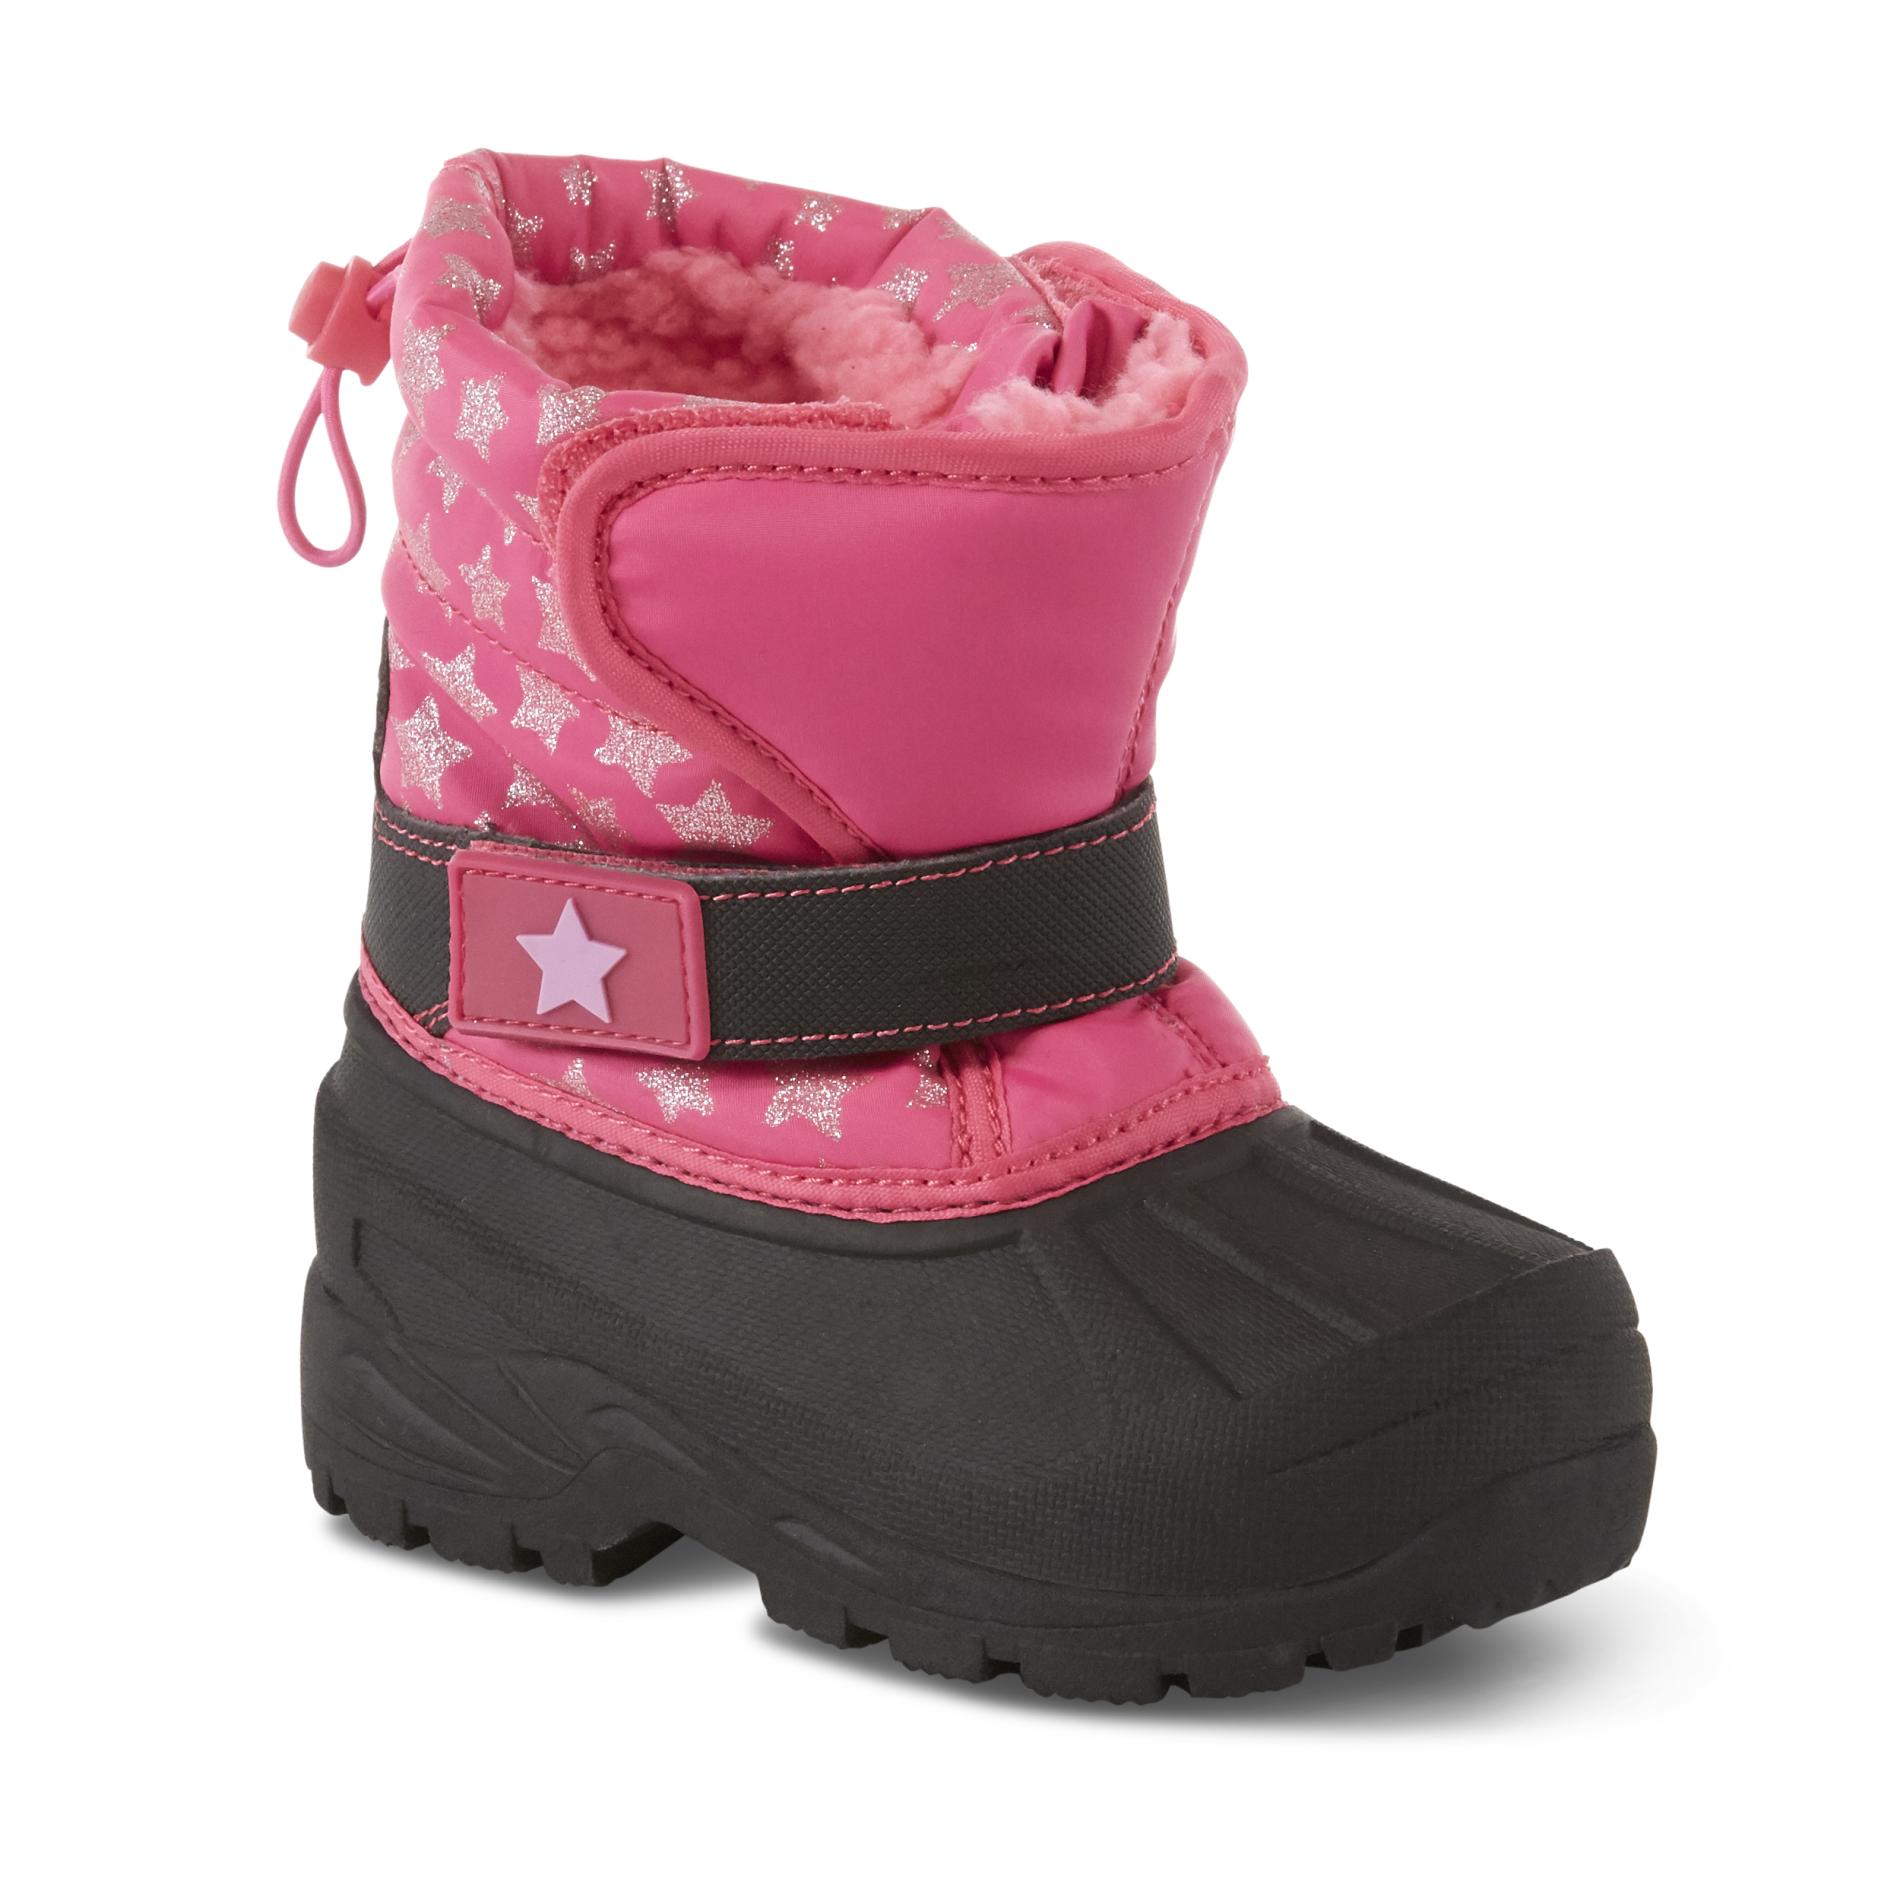 kmart winter boots